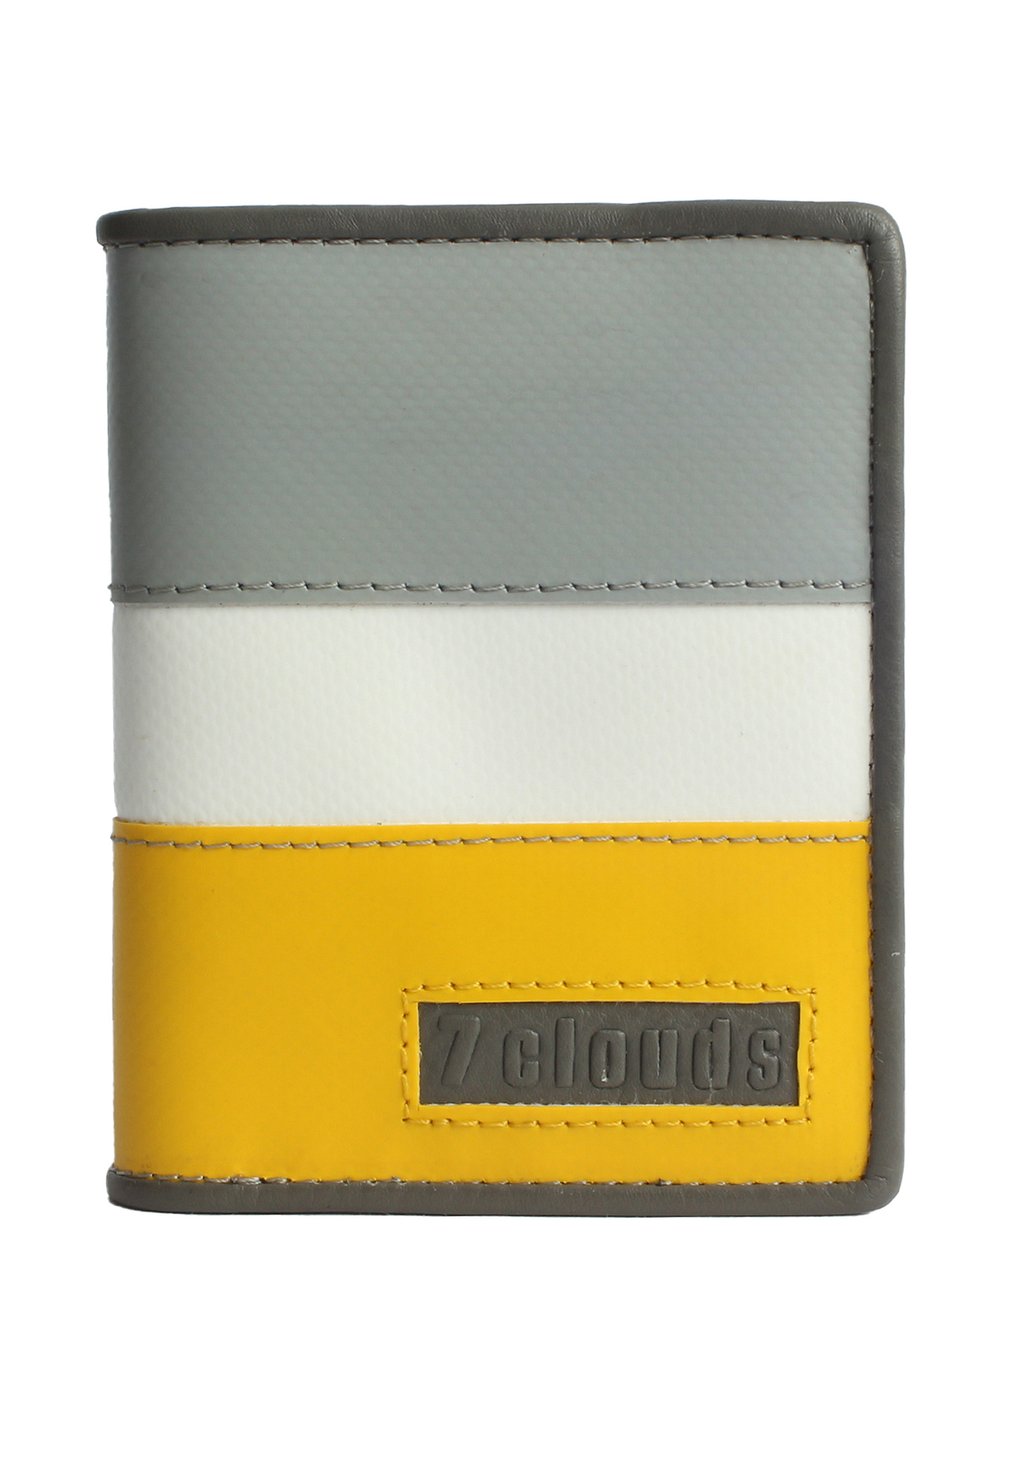 Кошелек RFID-KERON 71 7Clouds, цвет yellow white grey